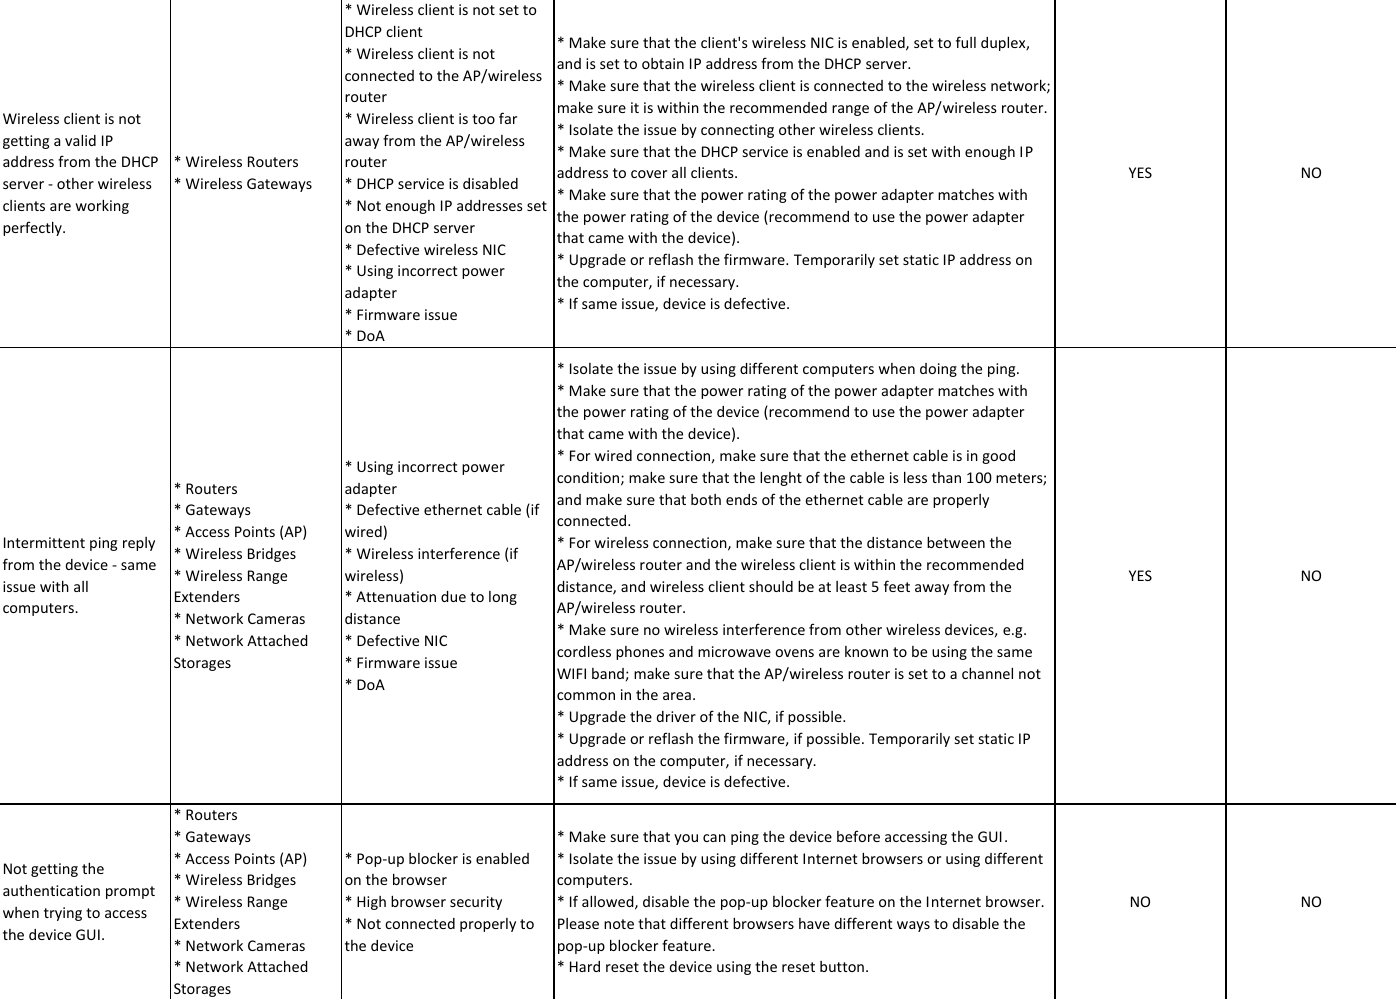 Page 5 of 11 - LInksys RMA Checklistx  22. L1 Checklist